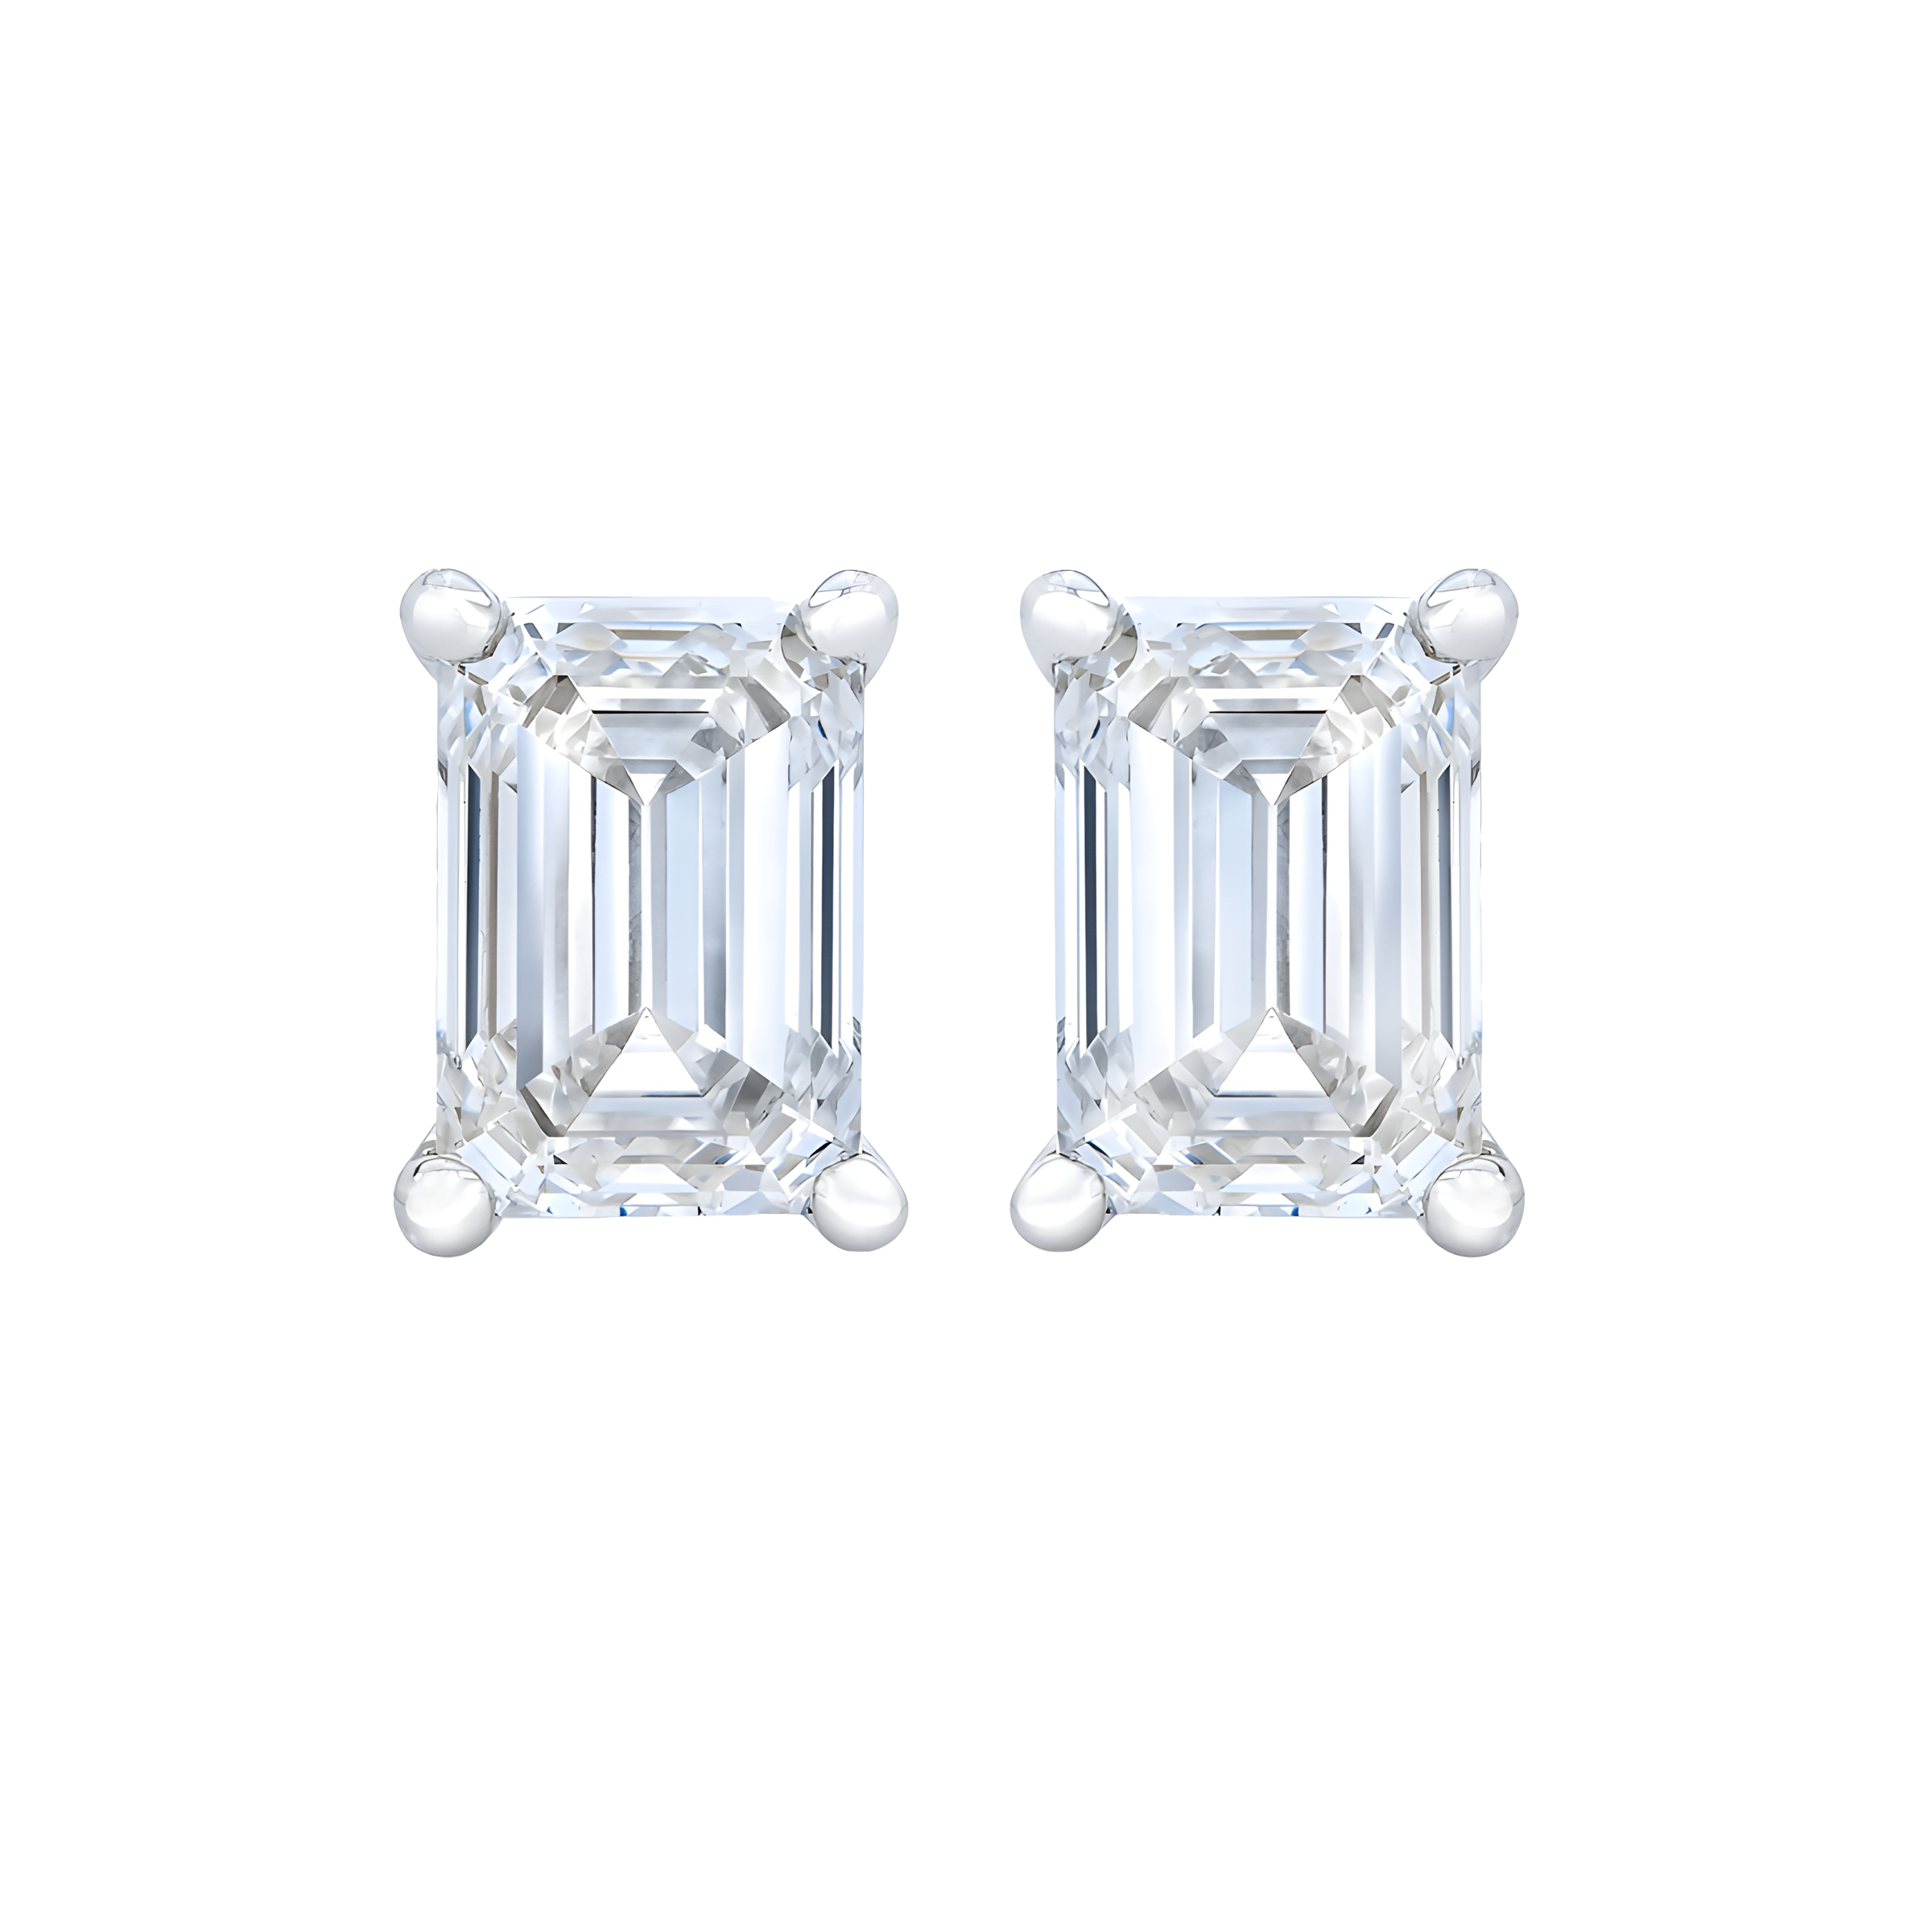 Emerald Cut Diamond Stud Earrings in Platinum